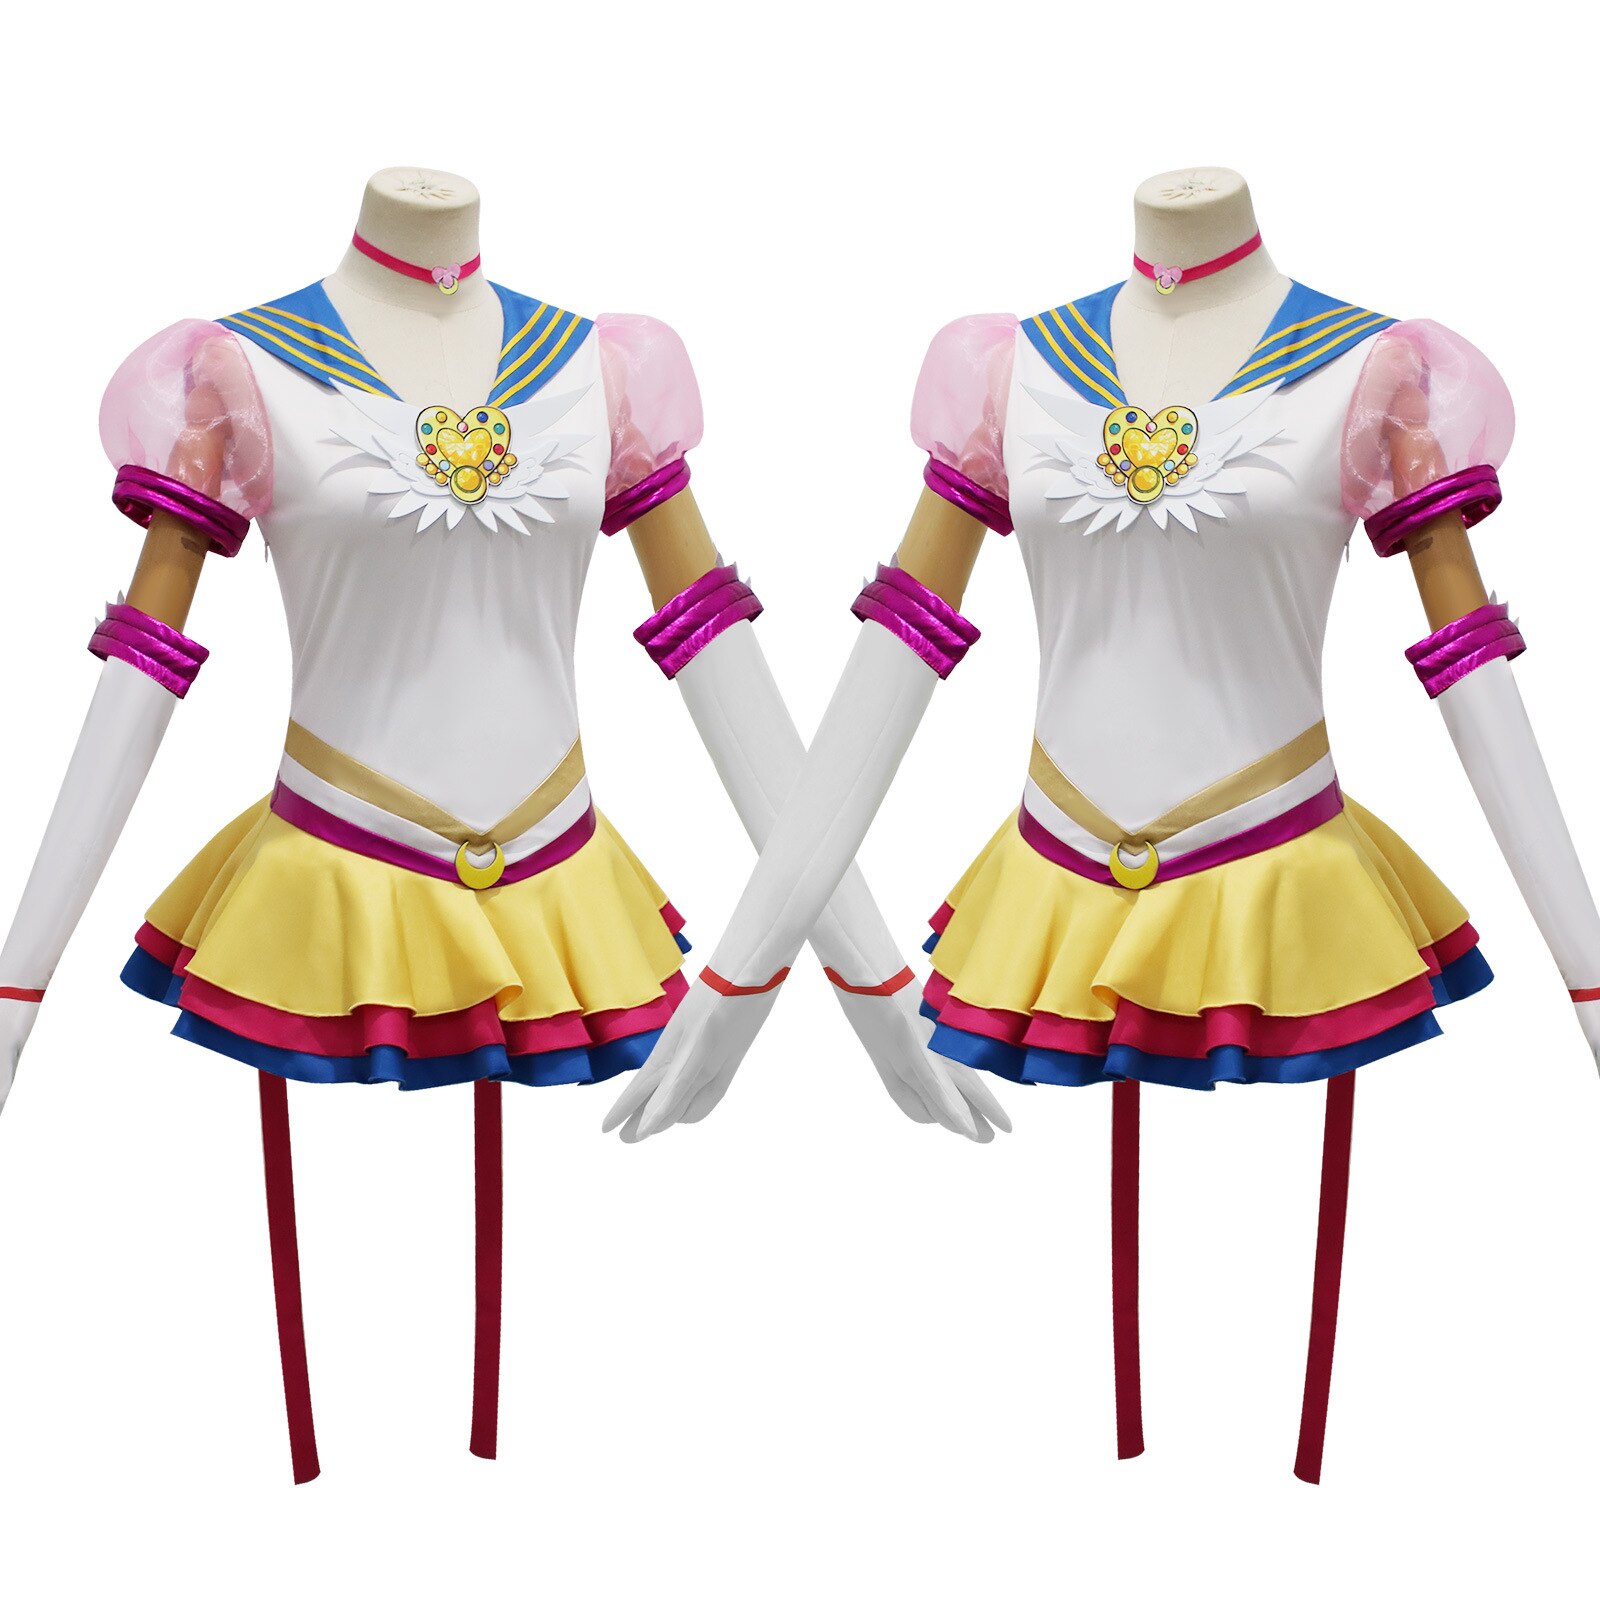 Sailor Moon Tsukino Usagi Uniforme Halloween Carnaval Cosplay